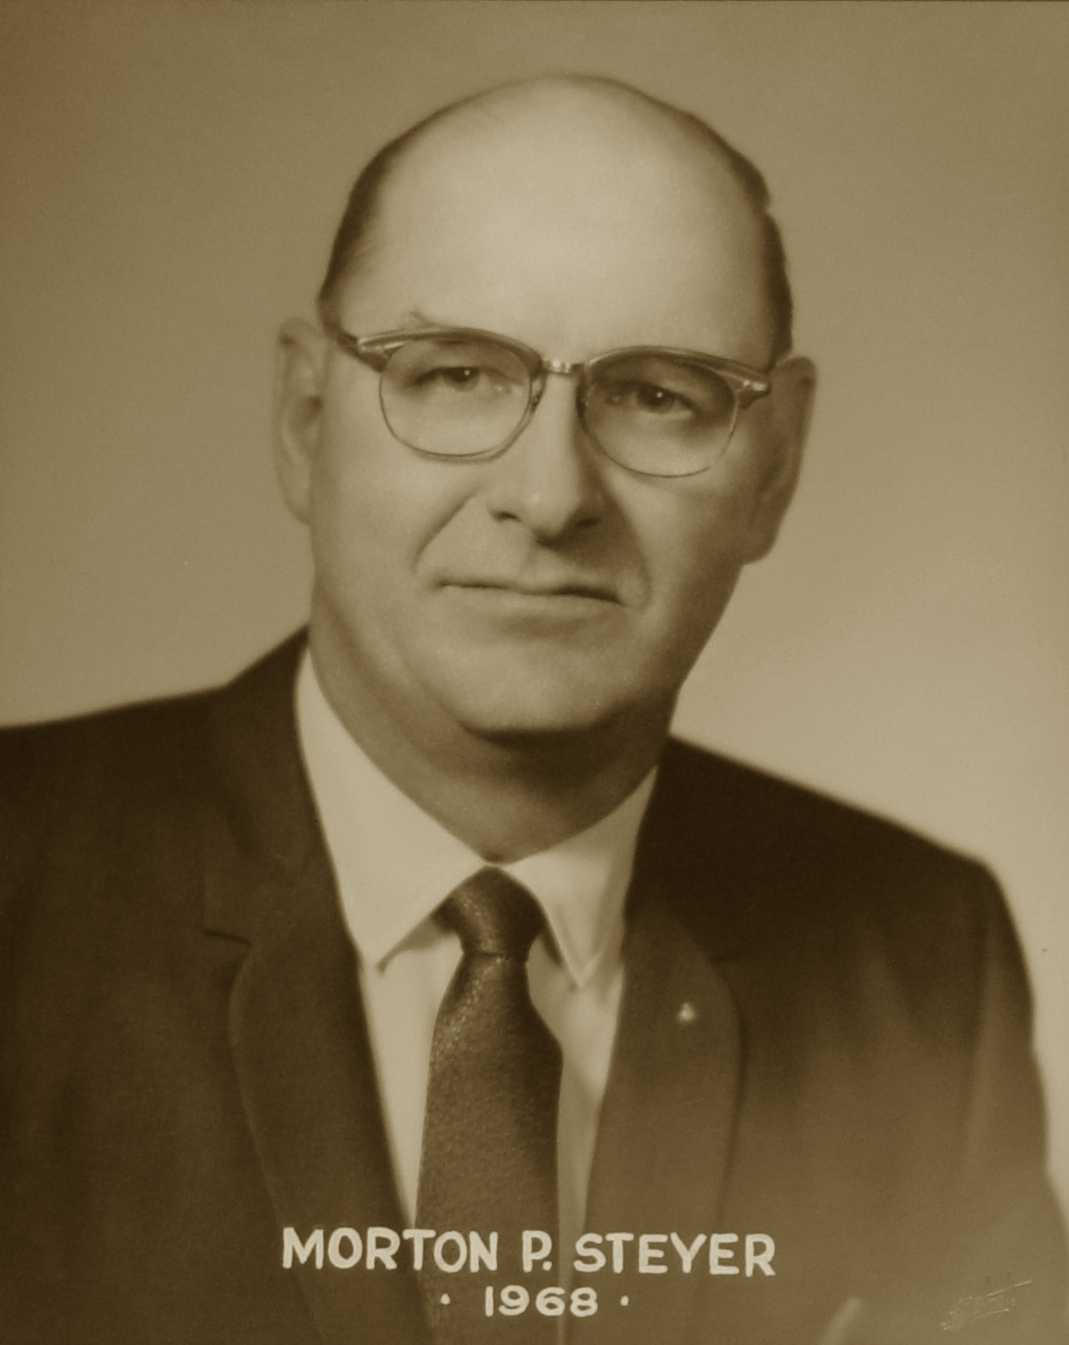 Morton P. Steyer, 1968